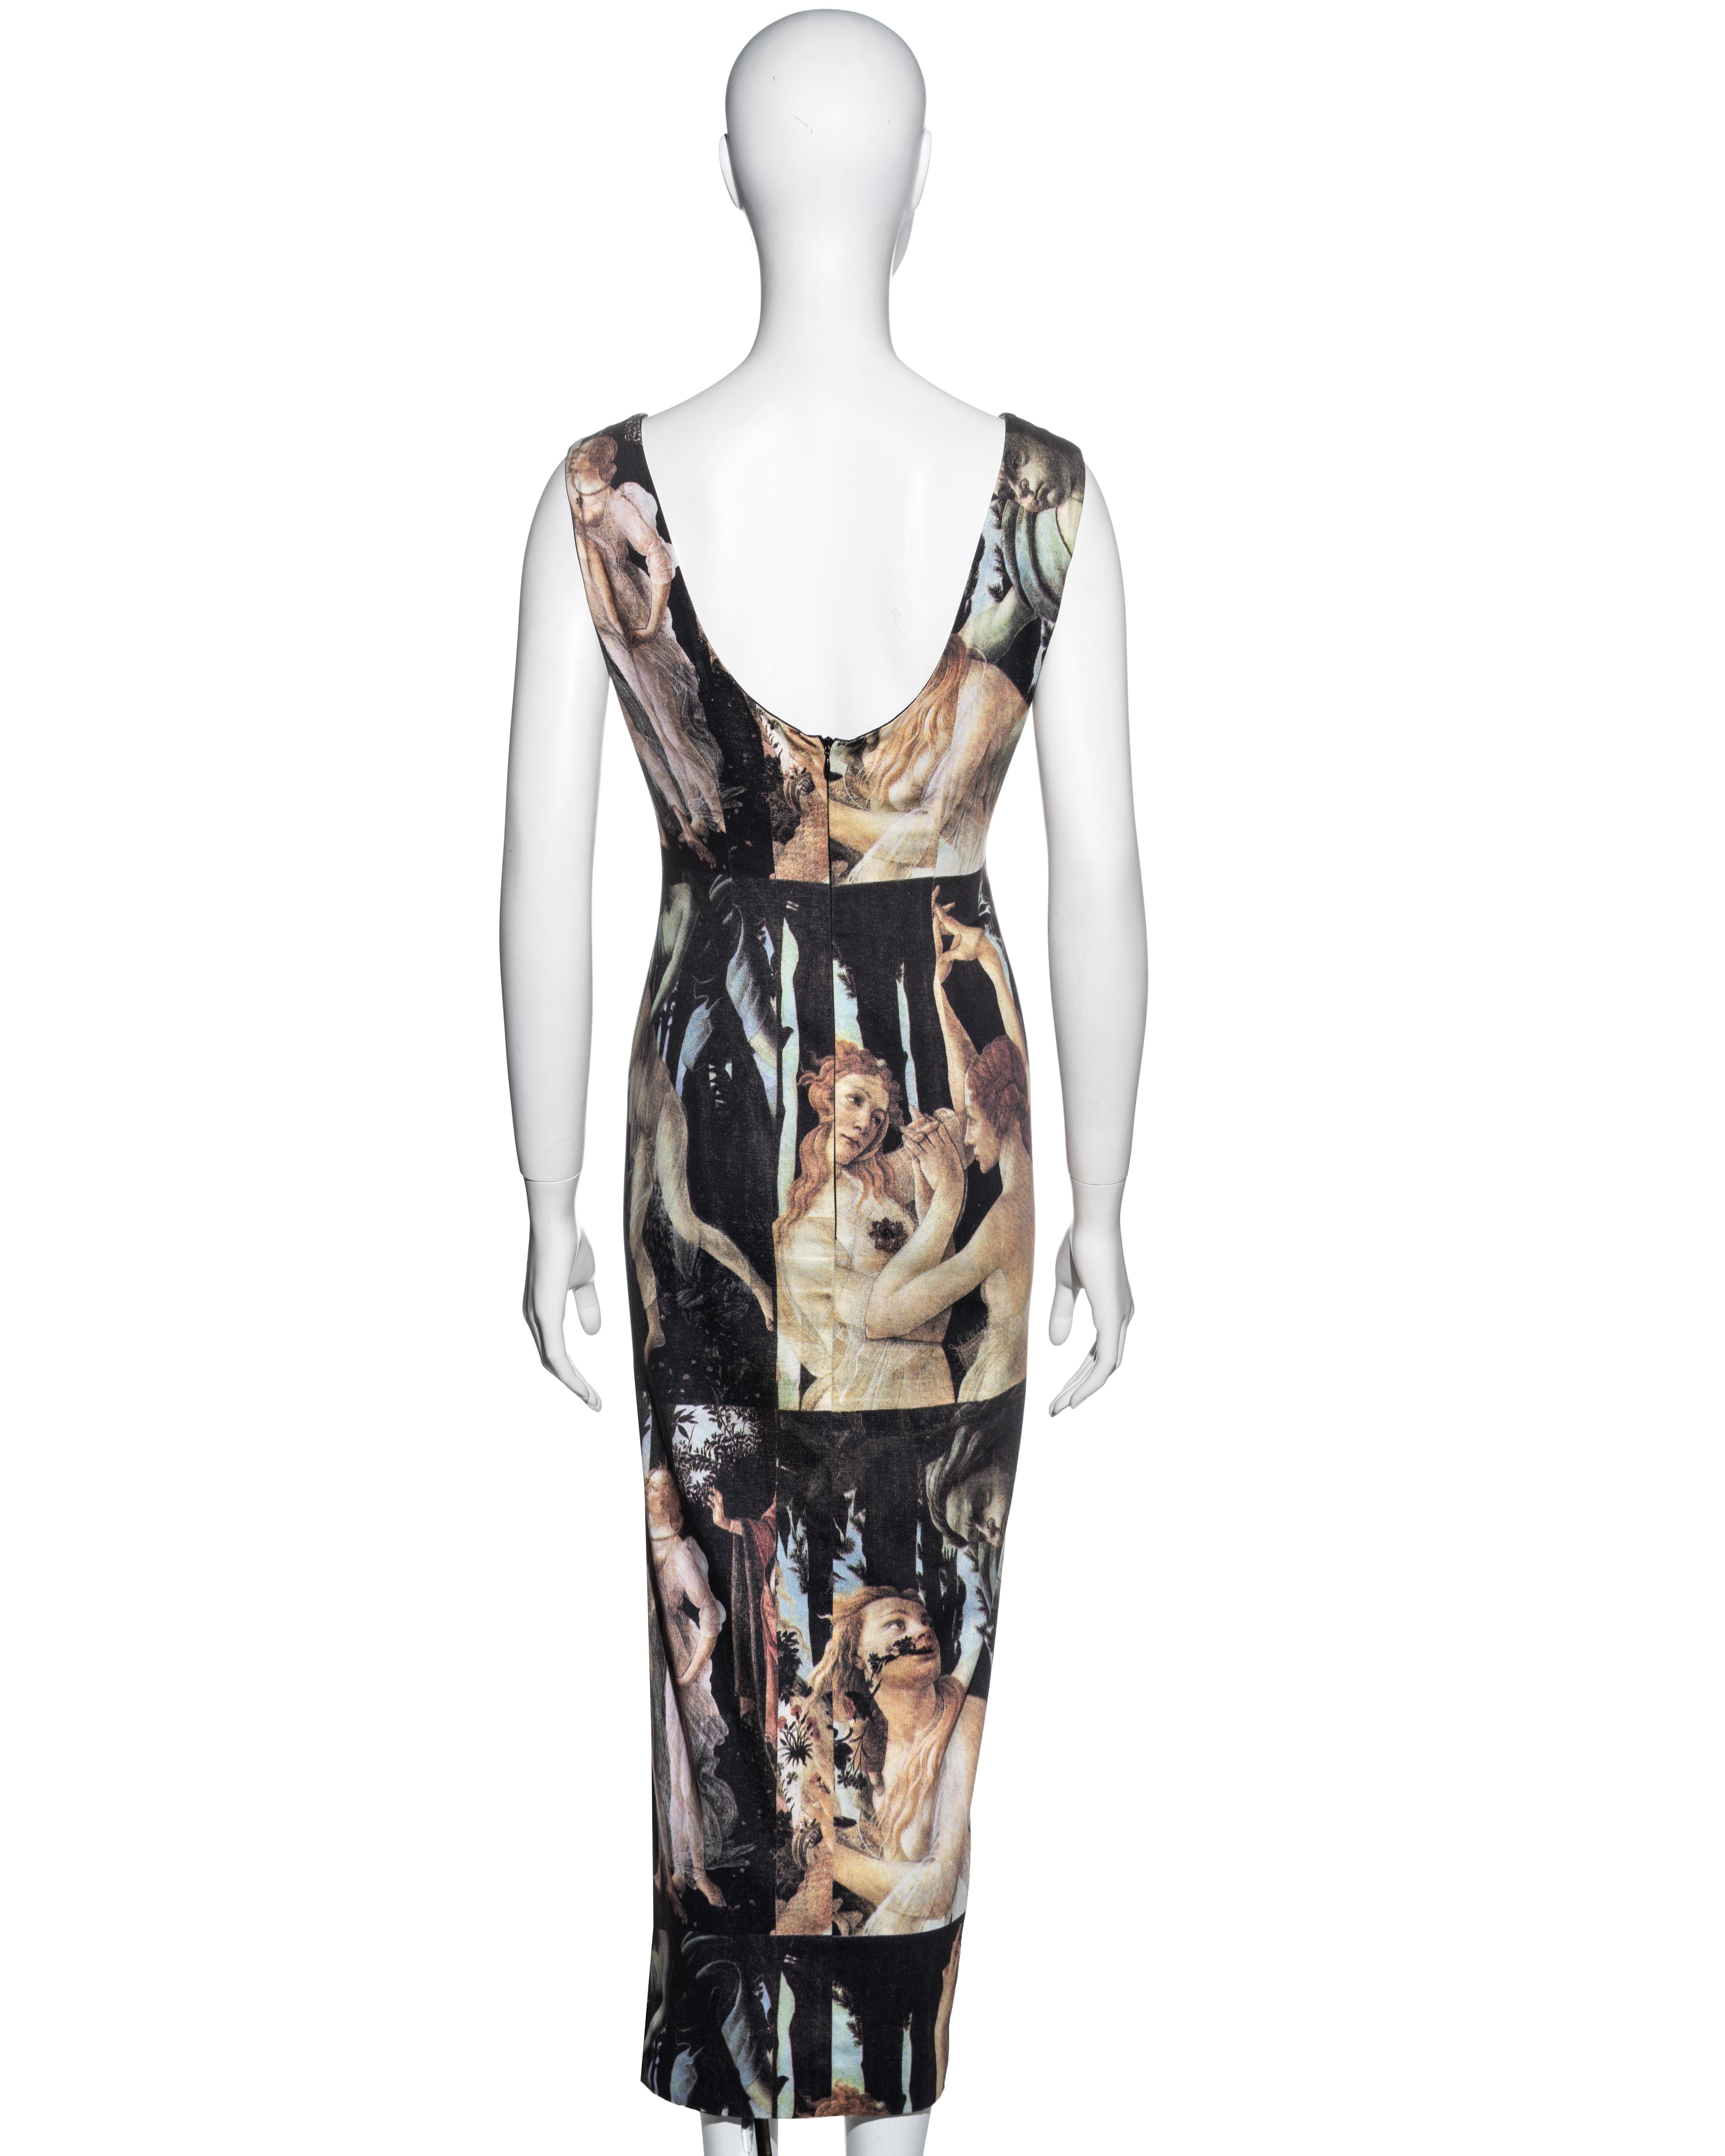 Women's Dolce & Gabbana cotton sheath dress with renaissance print, ss 1993